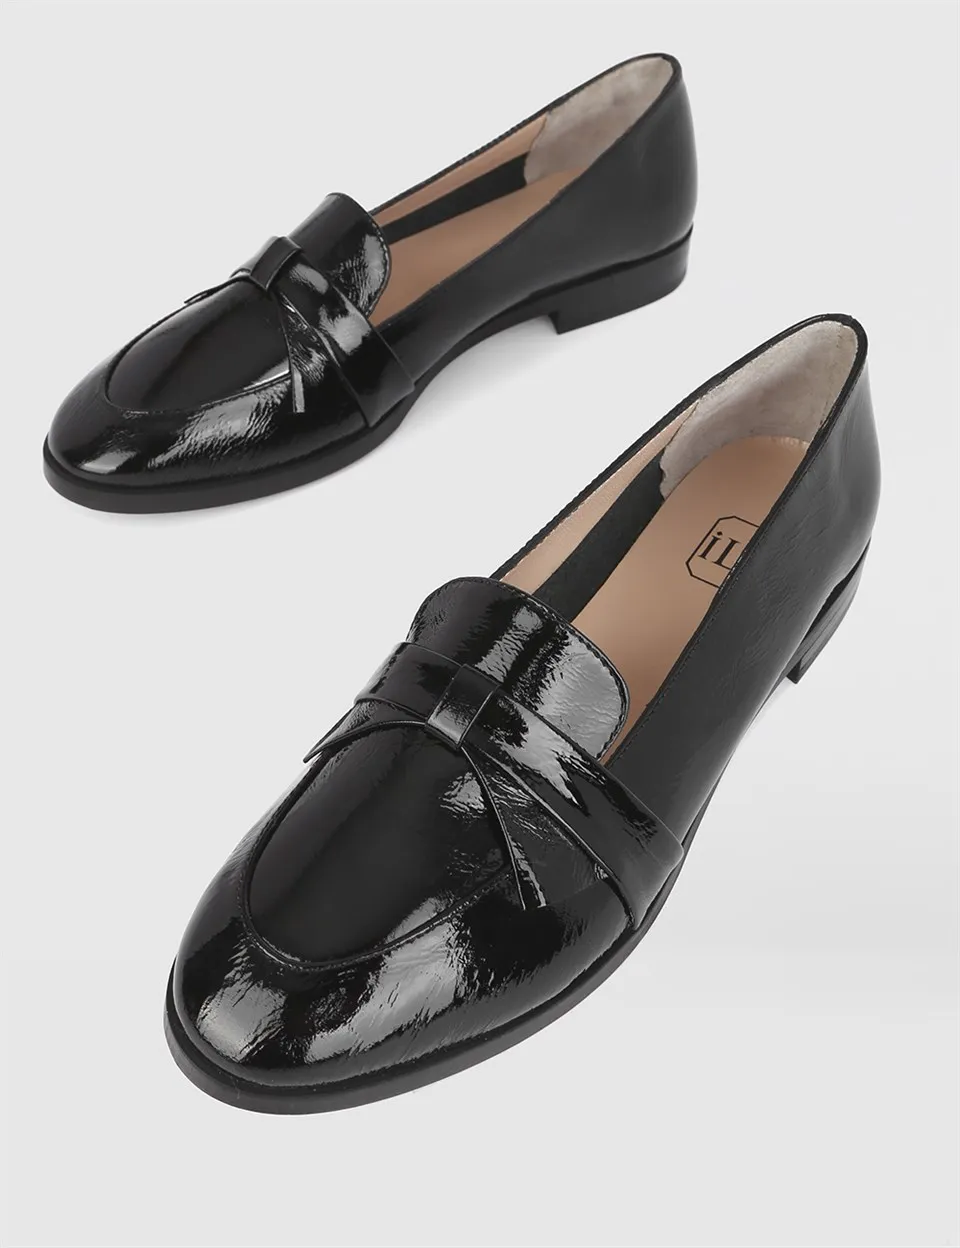 

ILVi-Genuine Leather Handmade Nano Black Wrinkled Patent Leather Women's Loafer Women Shoes 2021 Spring/Summer